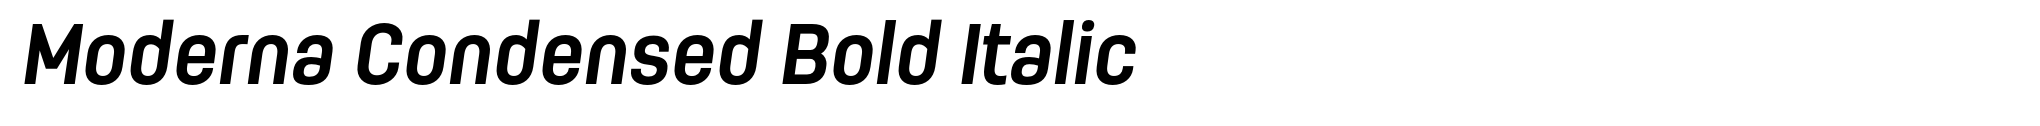 Moderna Condensed Bold Italic image